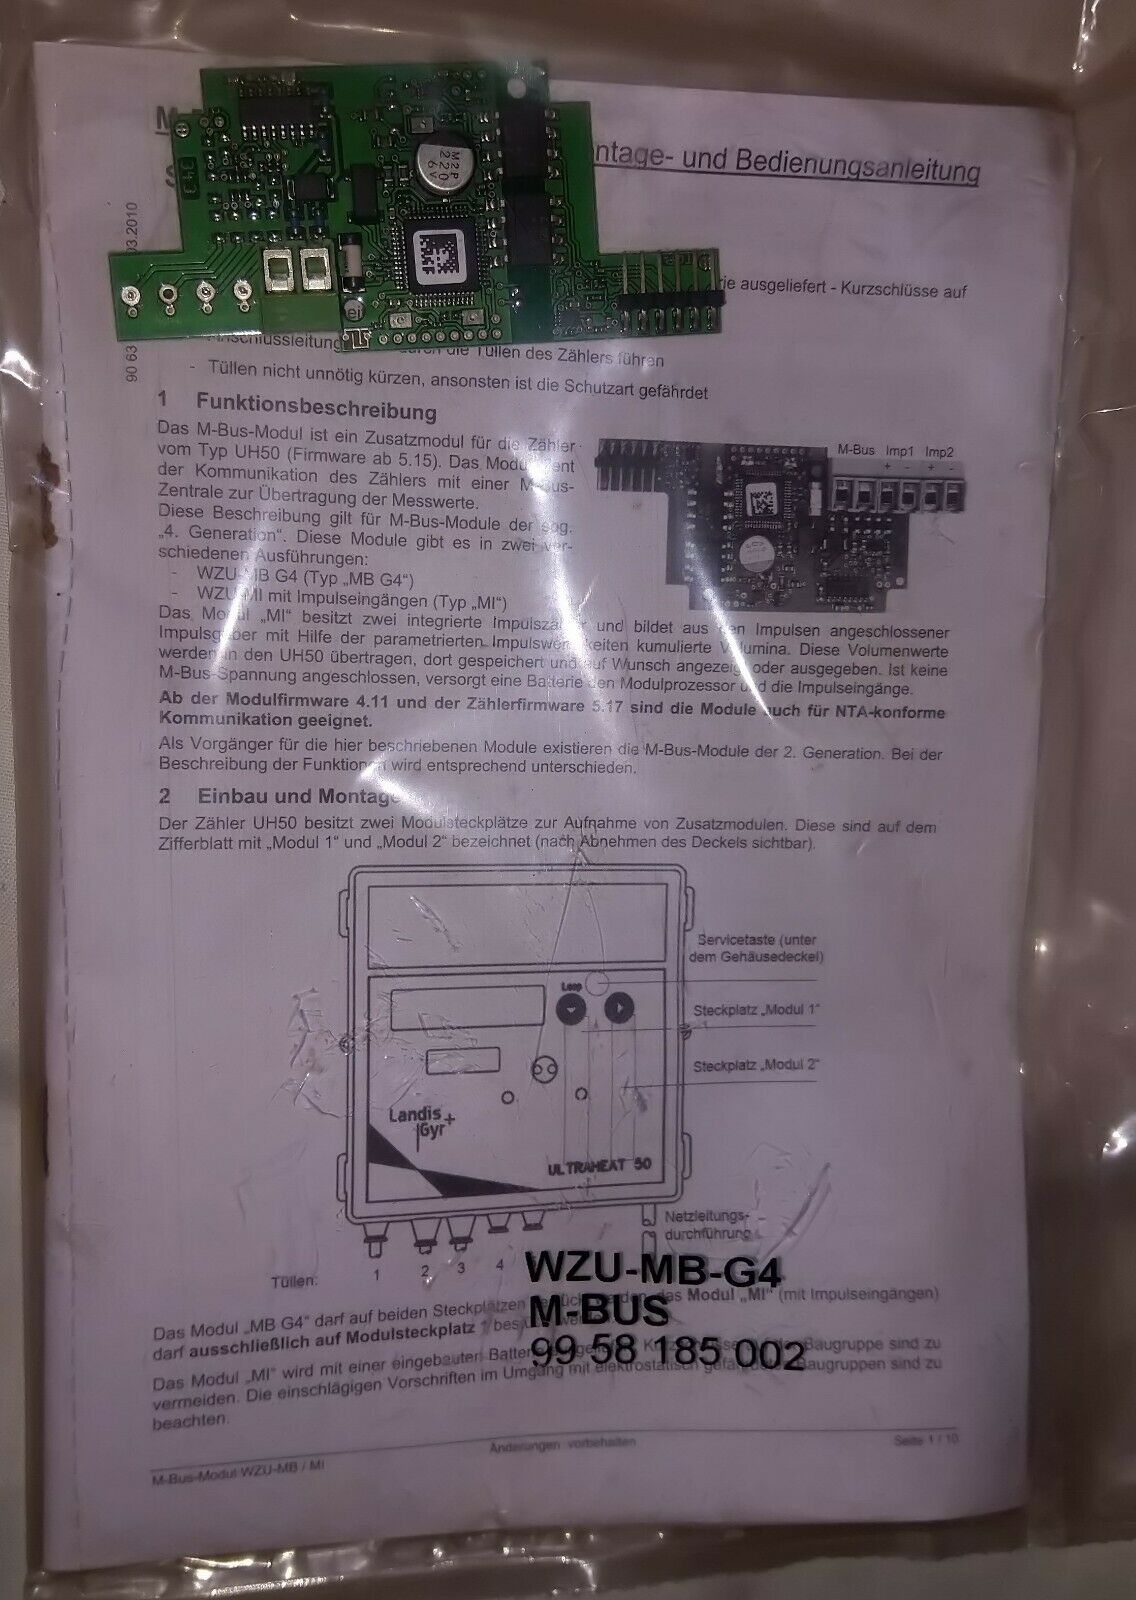 Wzu-mb-g4 - M-bus 模块适用于热/冷却能源仪表、 4 代 